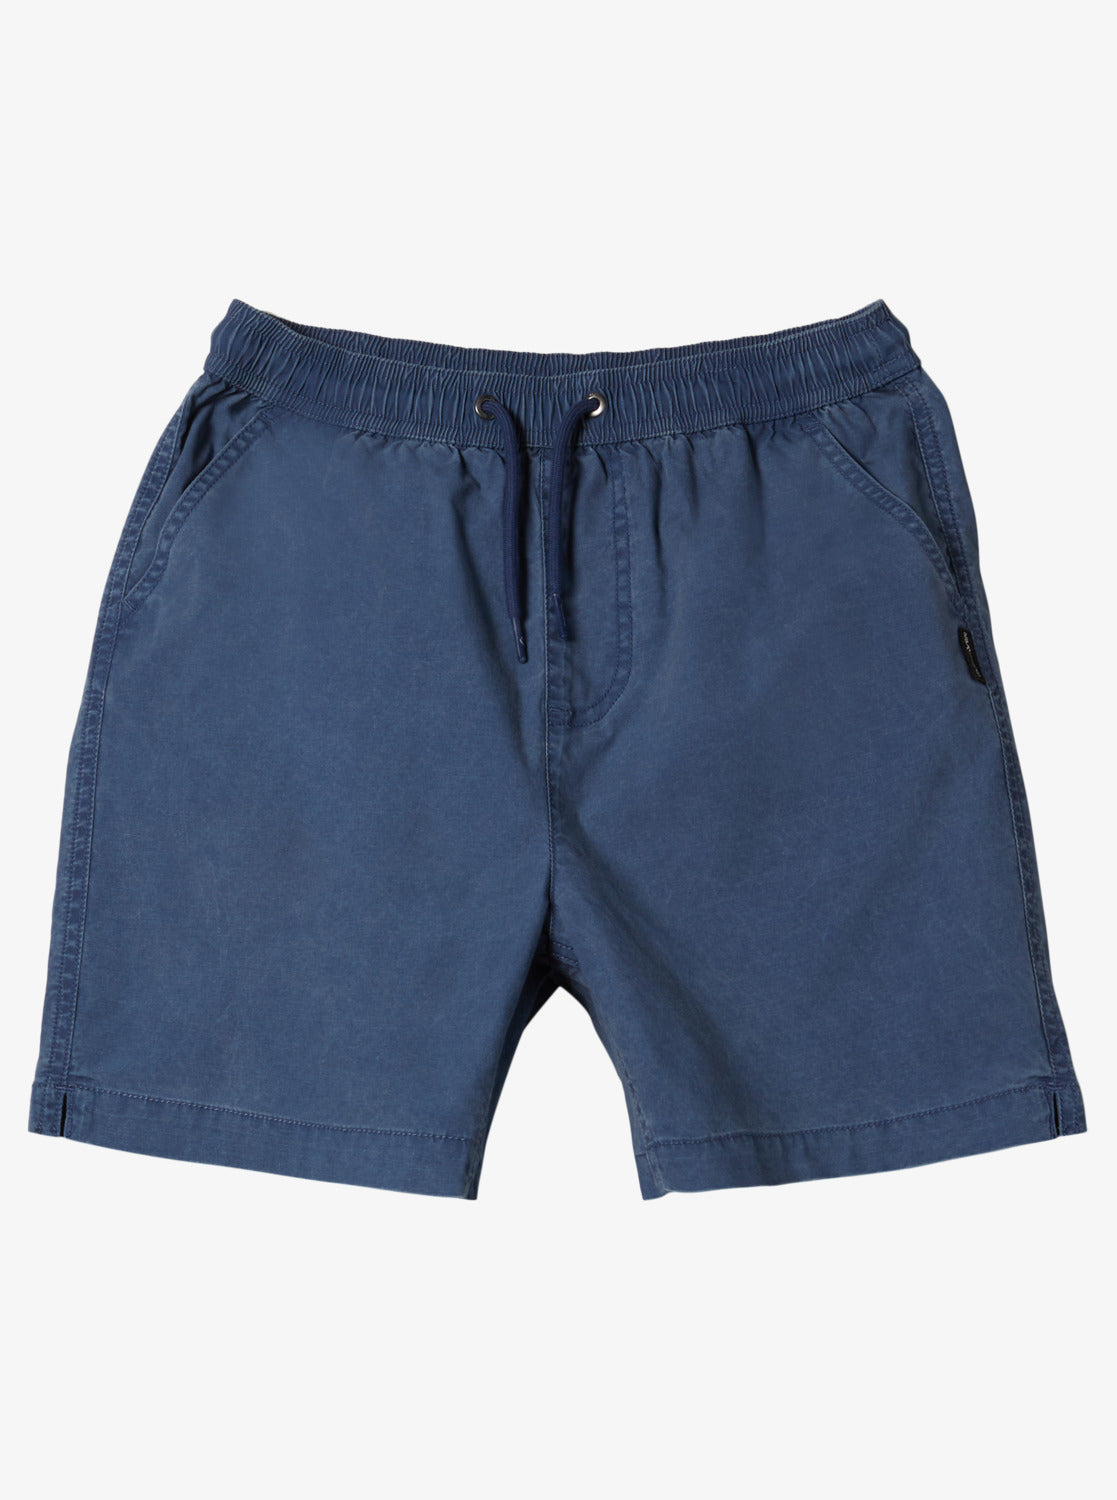 Xersion Boys Size Large 14-16 Navy Blue Quick-Dri Shorts